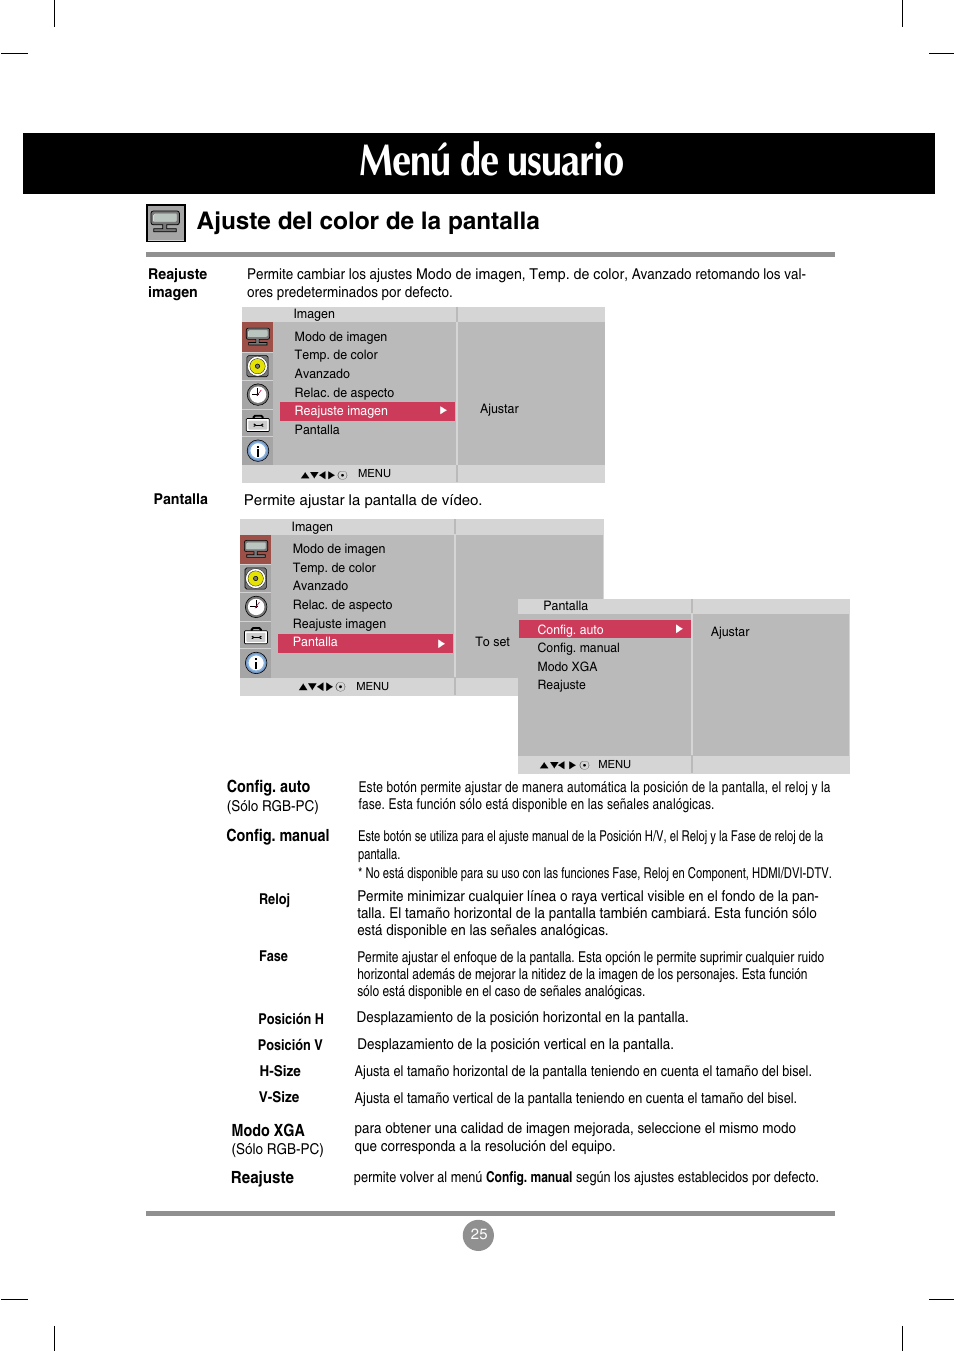 Menú de usuario, Ajuste del color de la pantalla | LG M3702C-BA Manual del usuario | Página 26 / 67